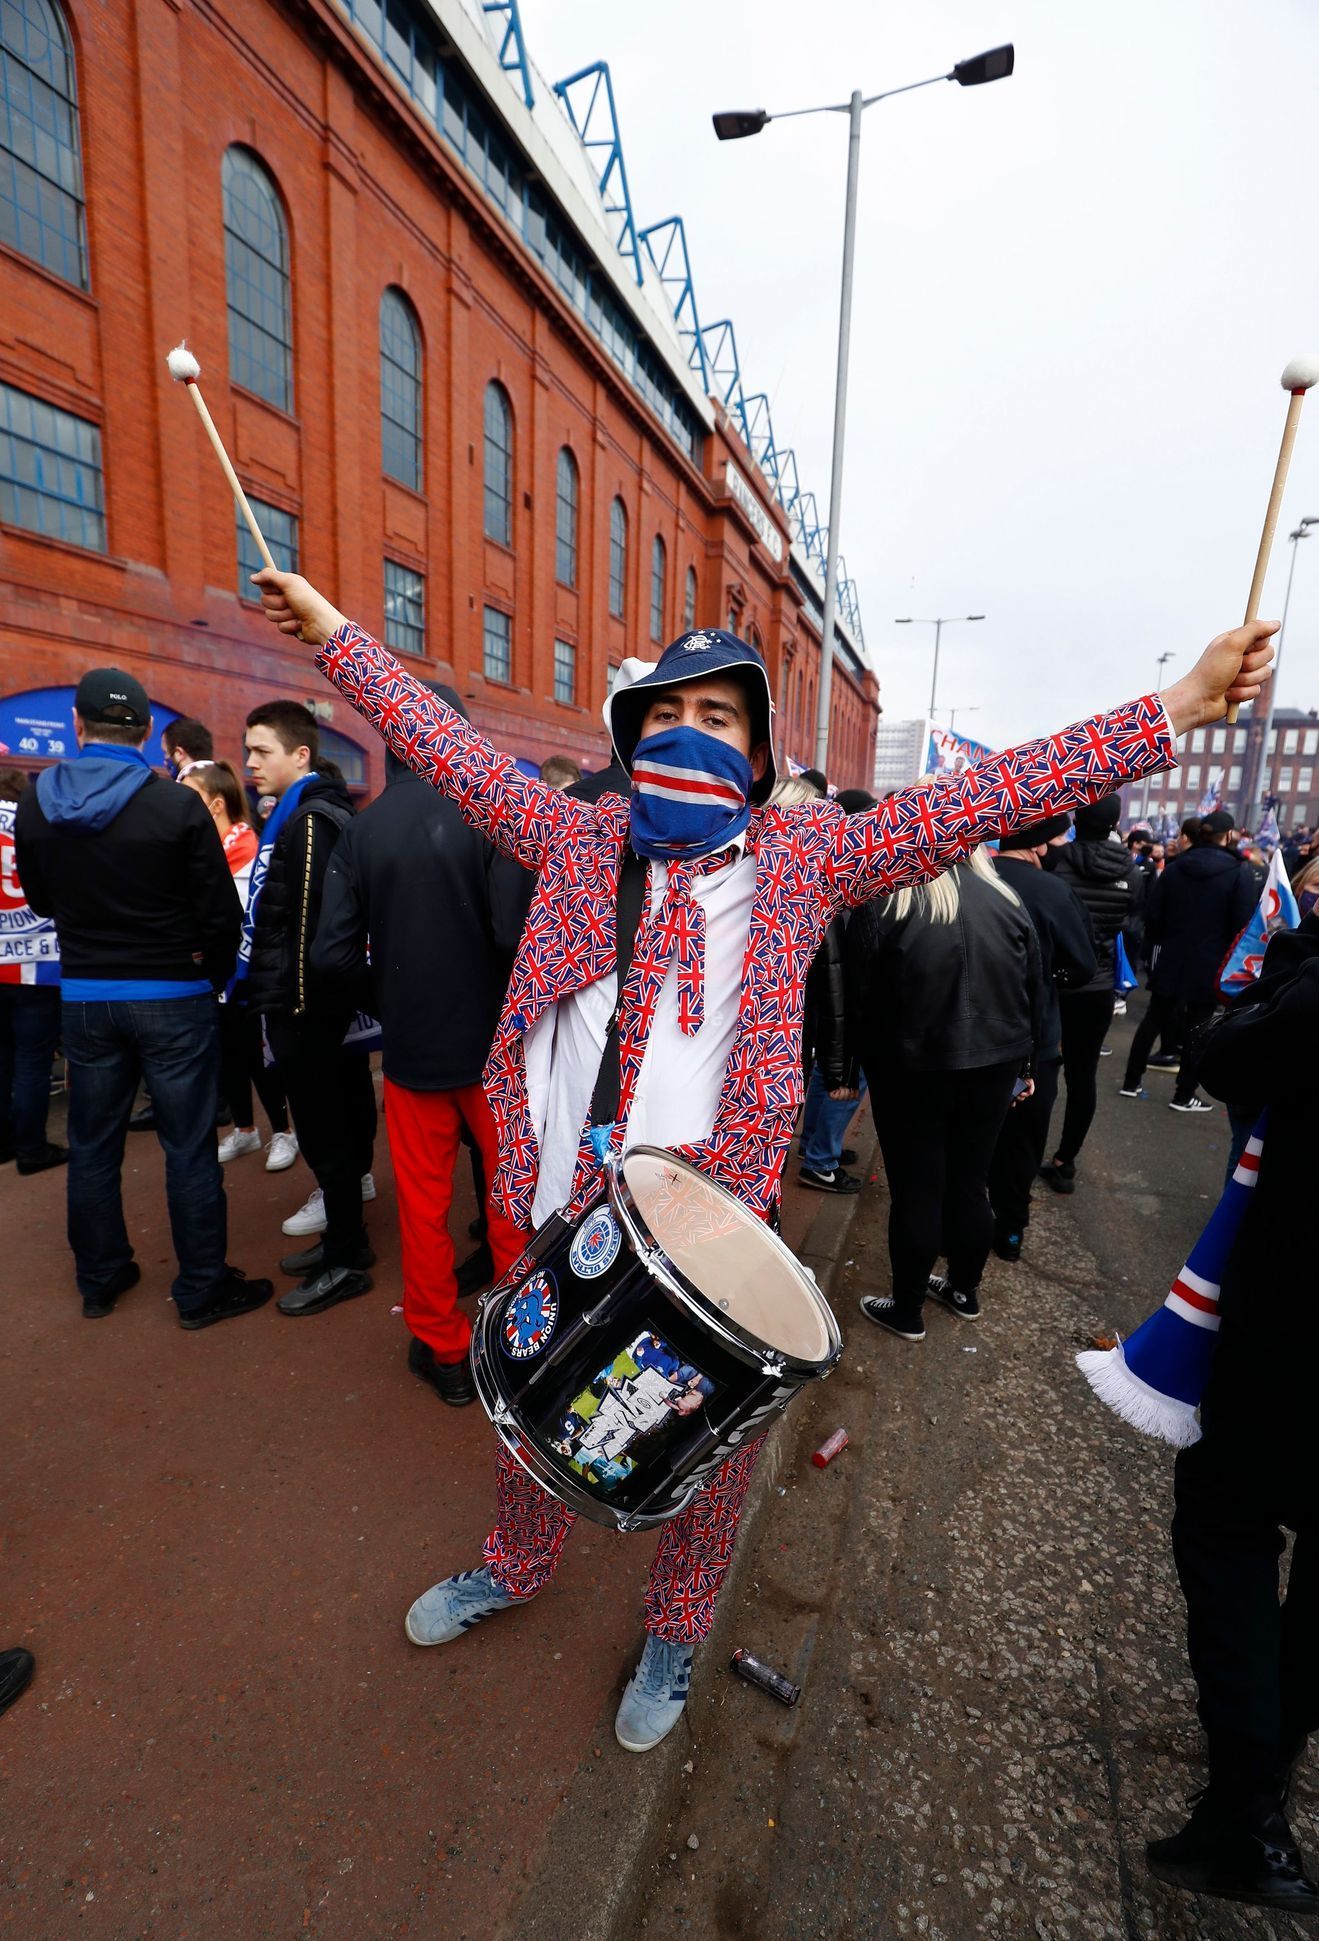 Glasgow Rangers, oslavy zisku skotského titulu 2021